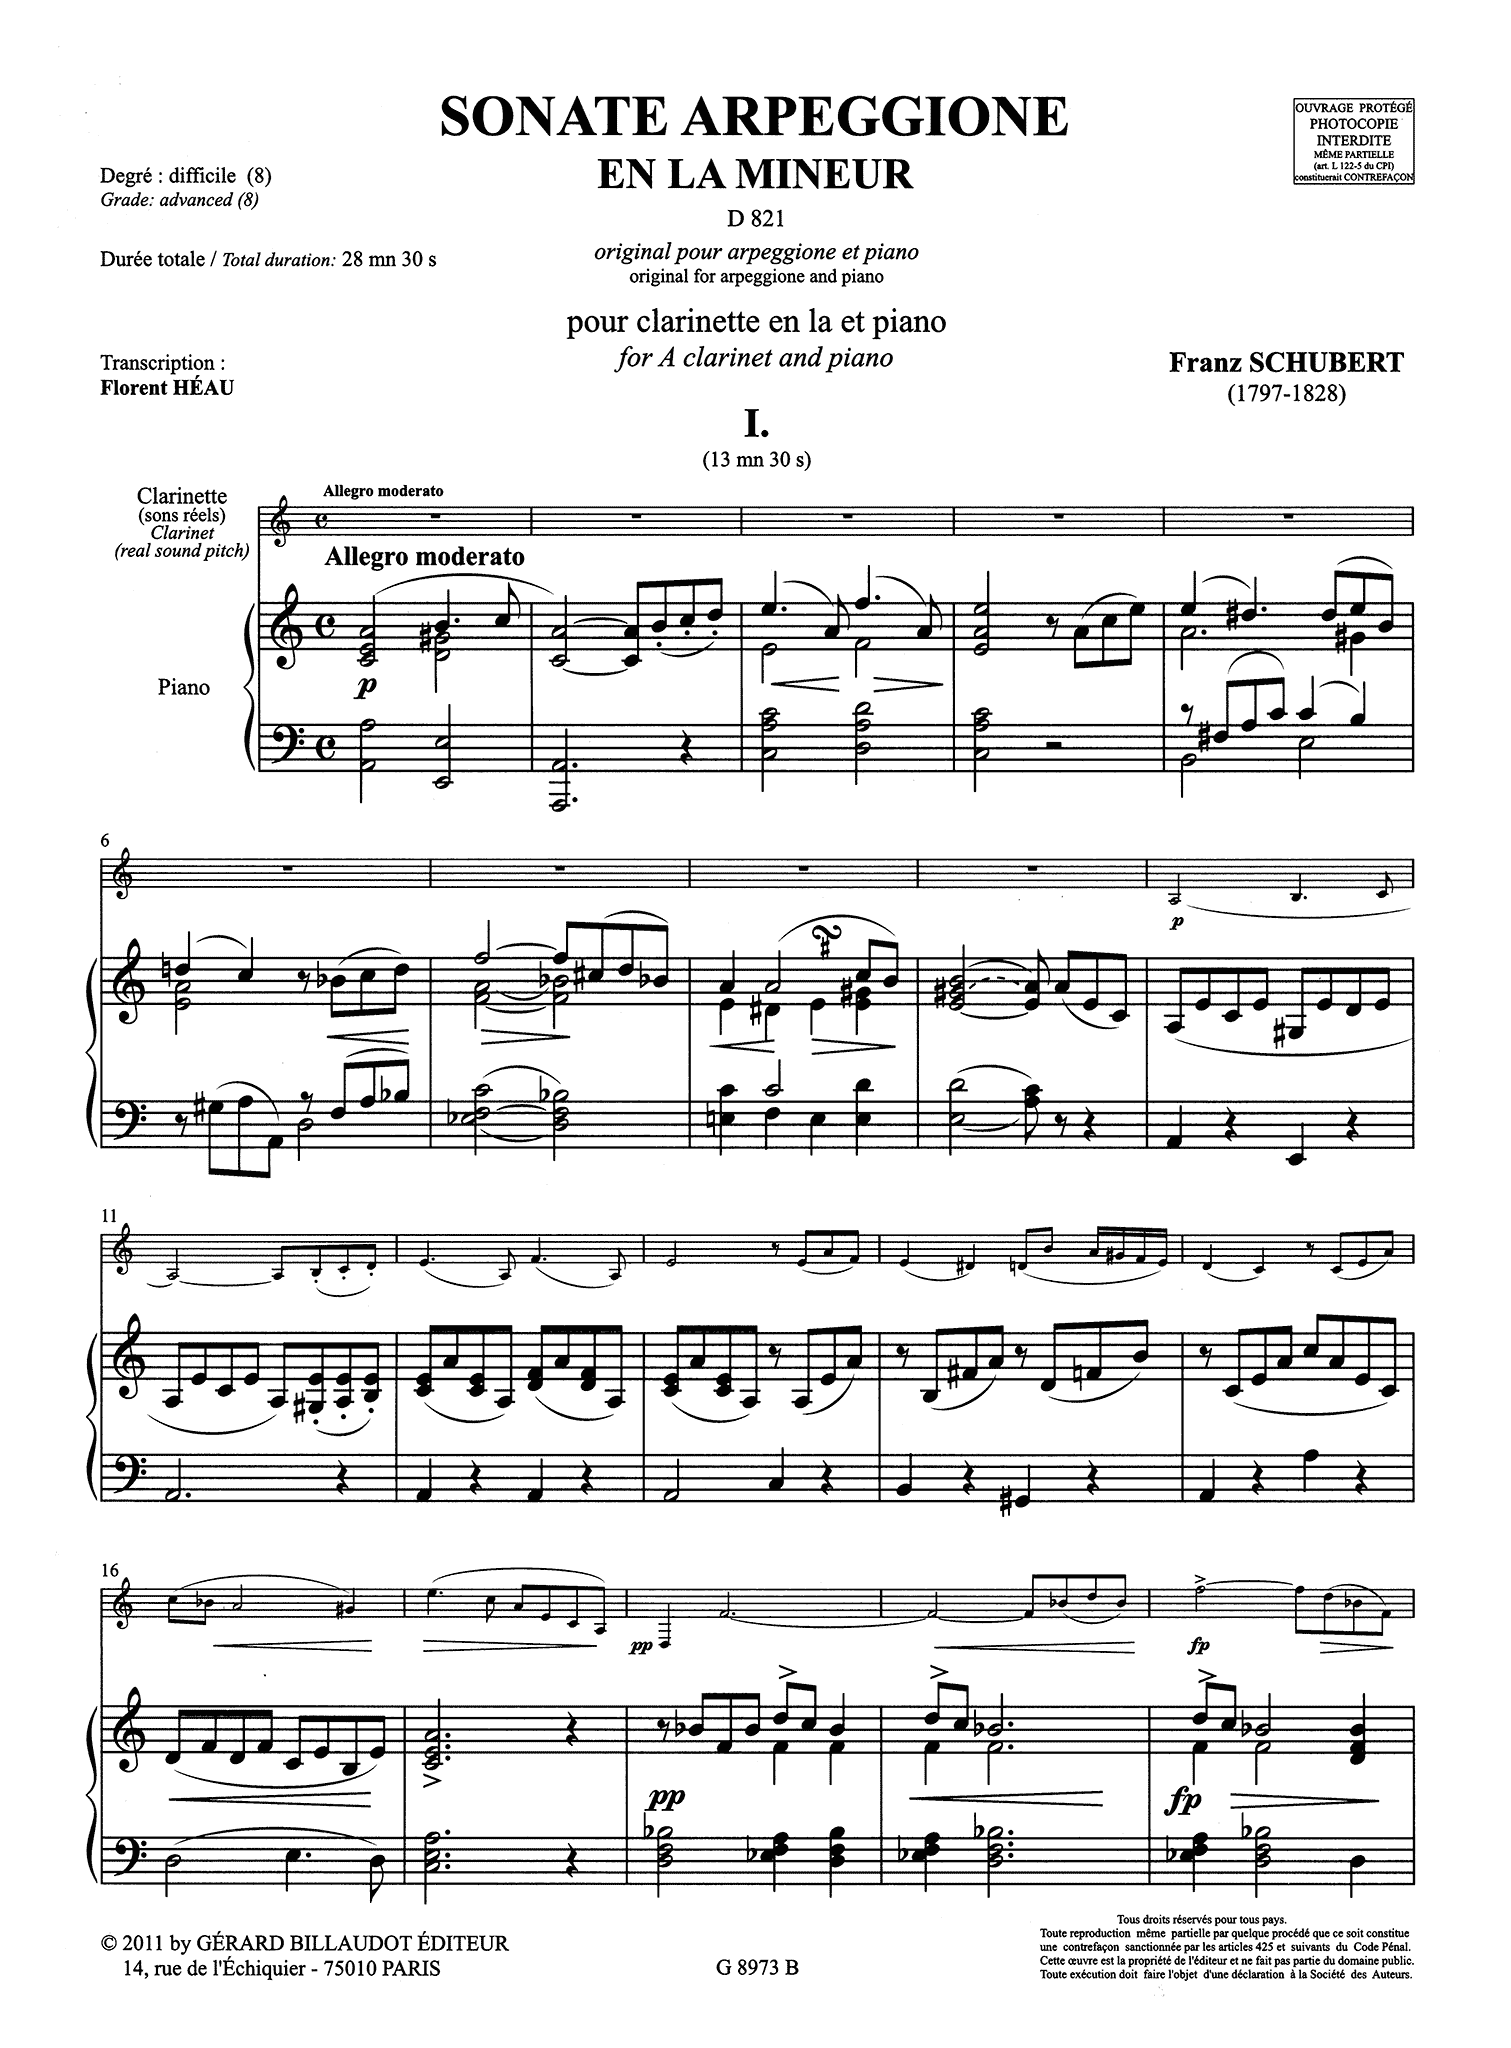 Schubert Arpeggione Sonata clarinet transcription Billaudot - Movement 1